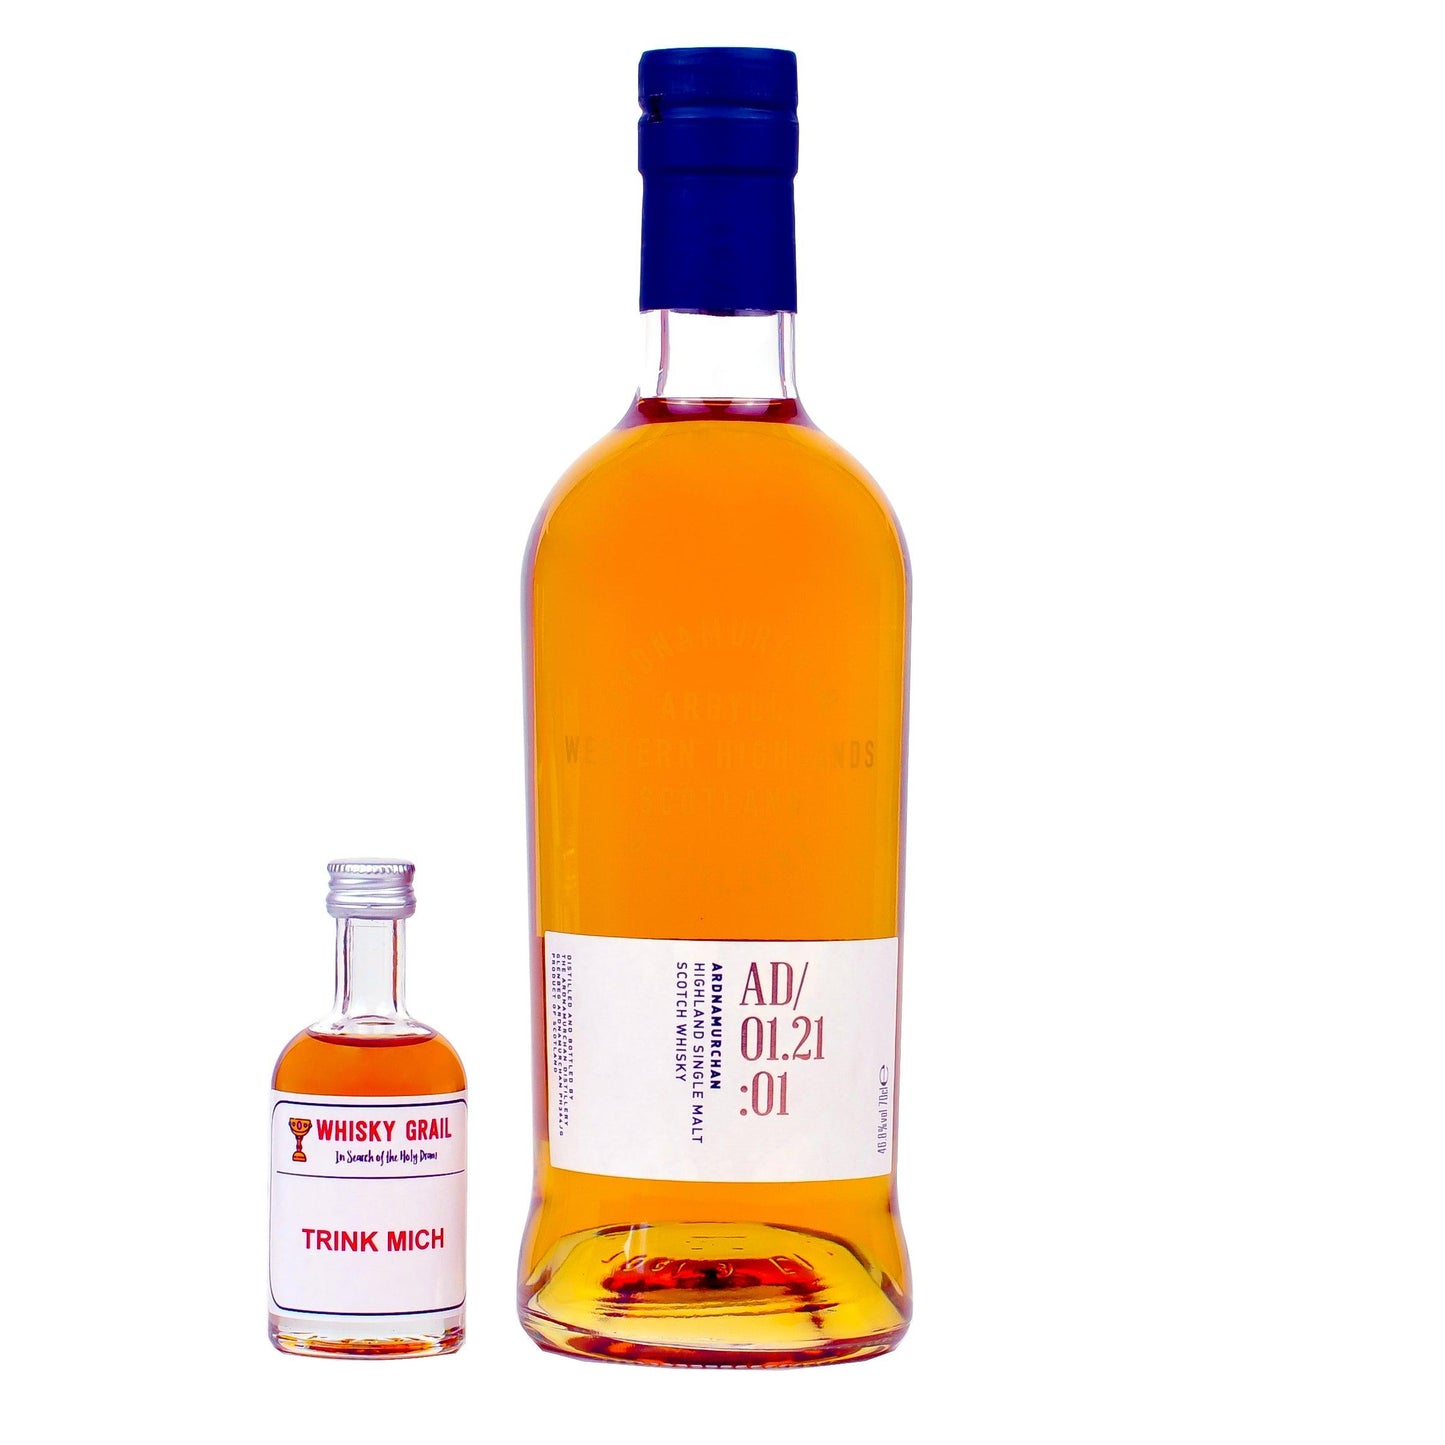 Ardnamurchan AD/01.21:01 - Whisky Grail